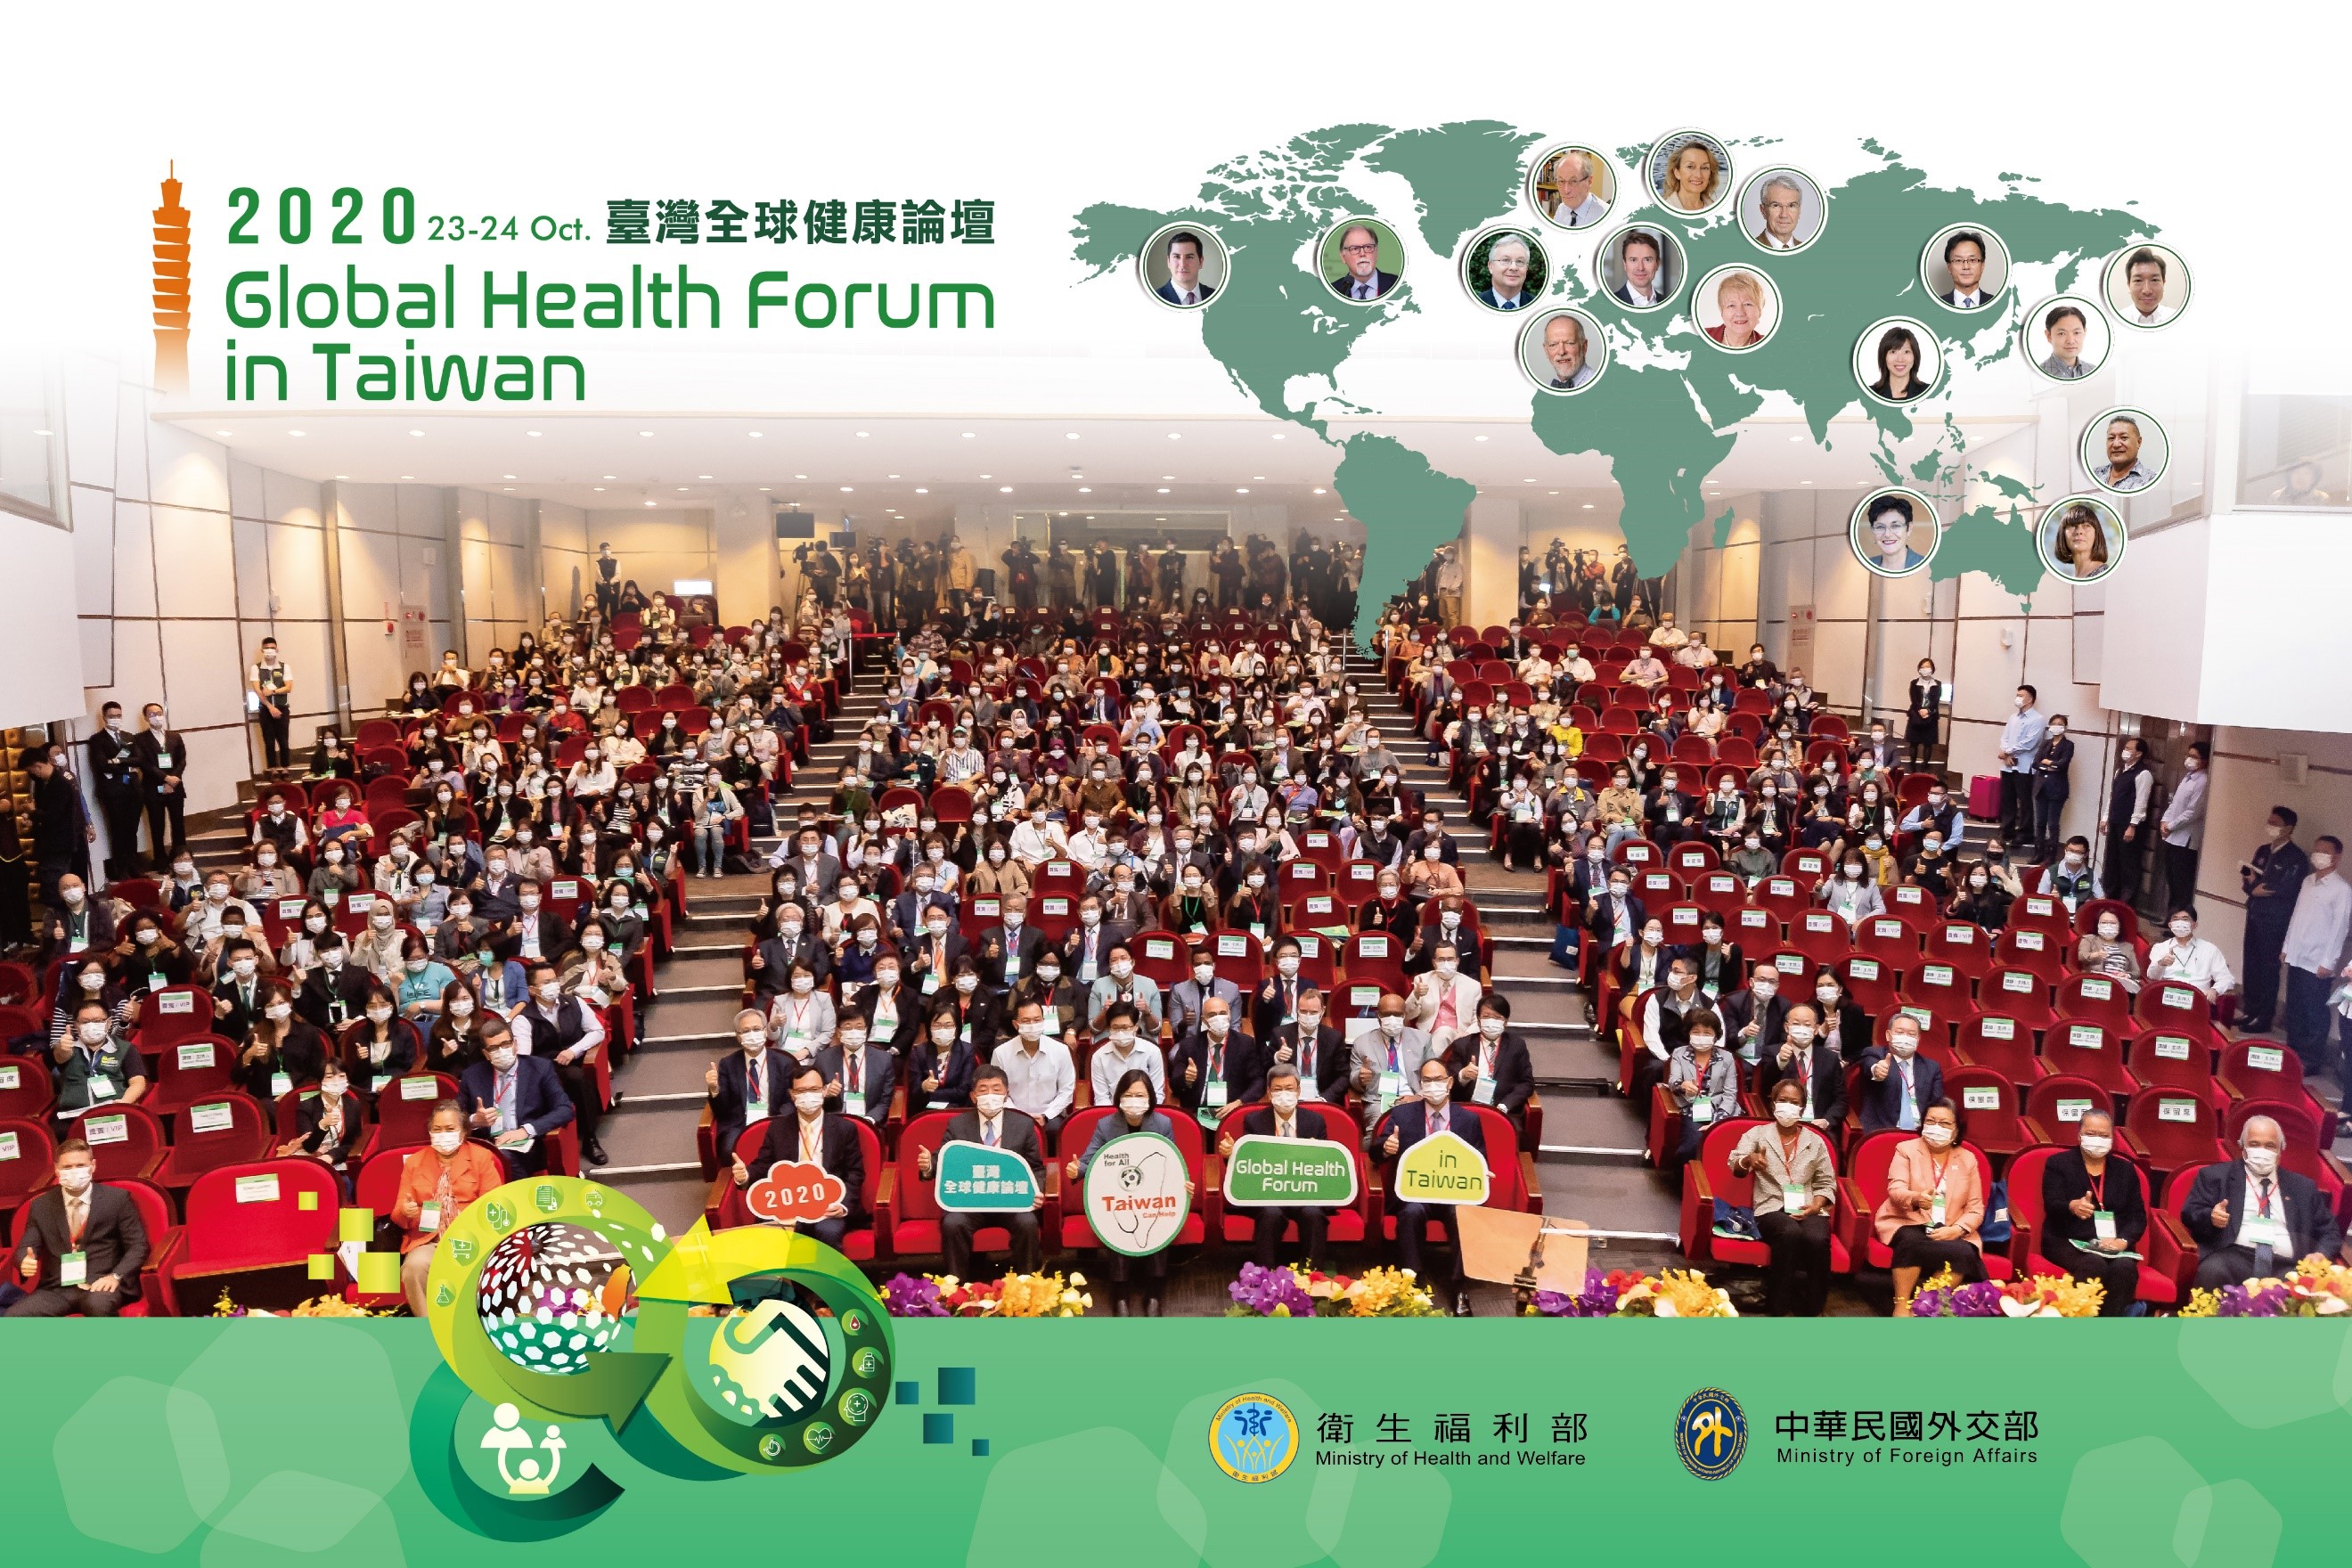 The 2020 Global Health Forum in Taiwan